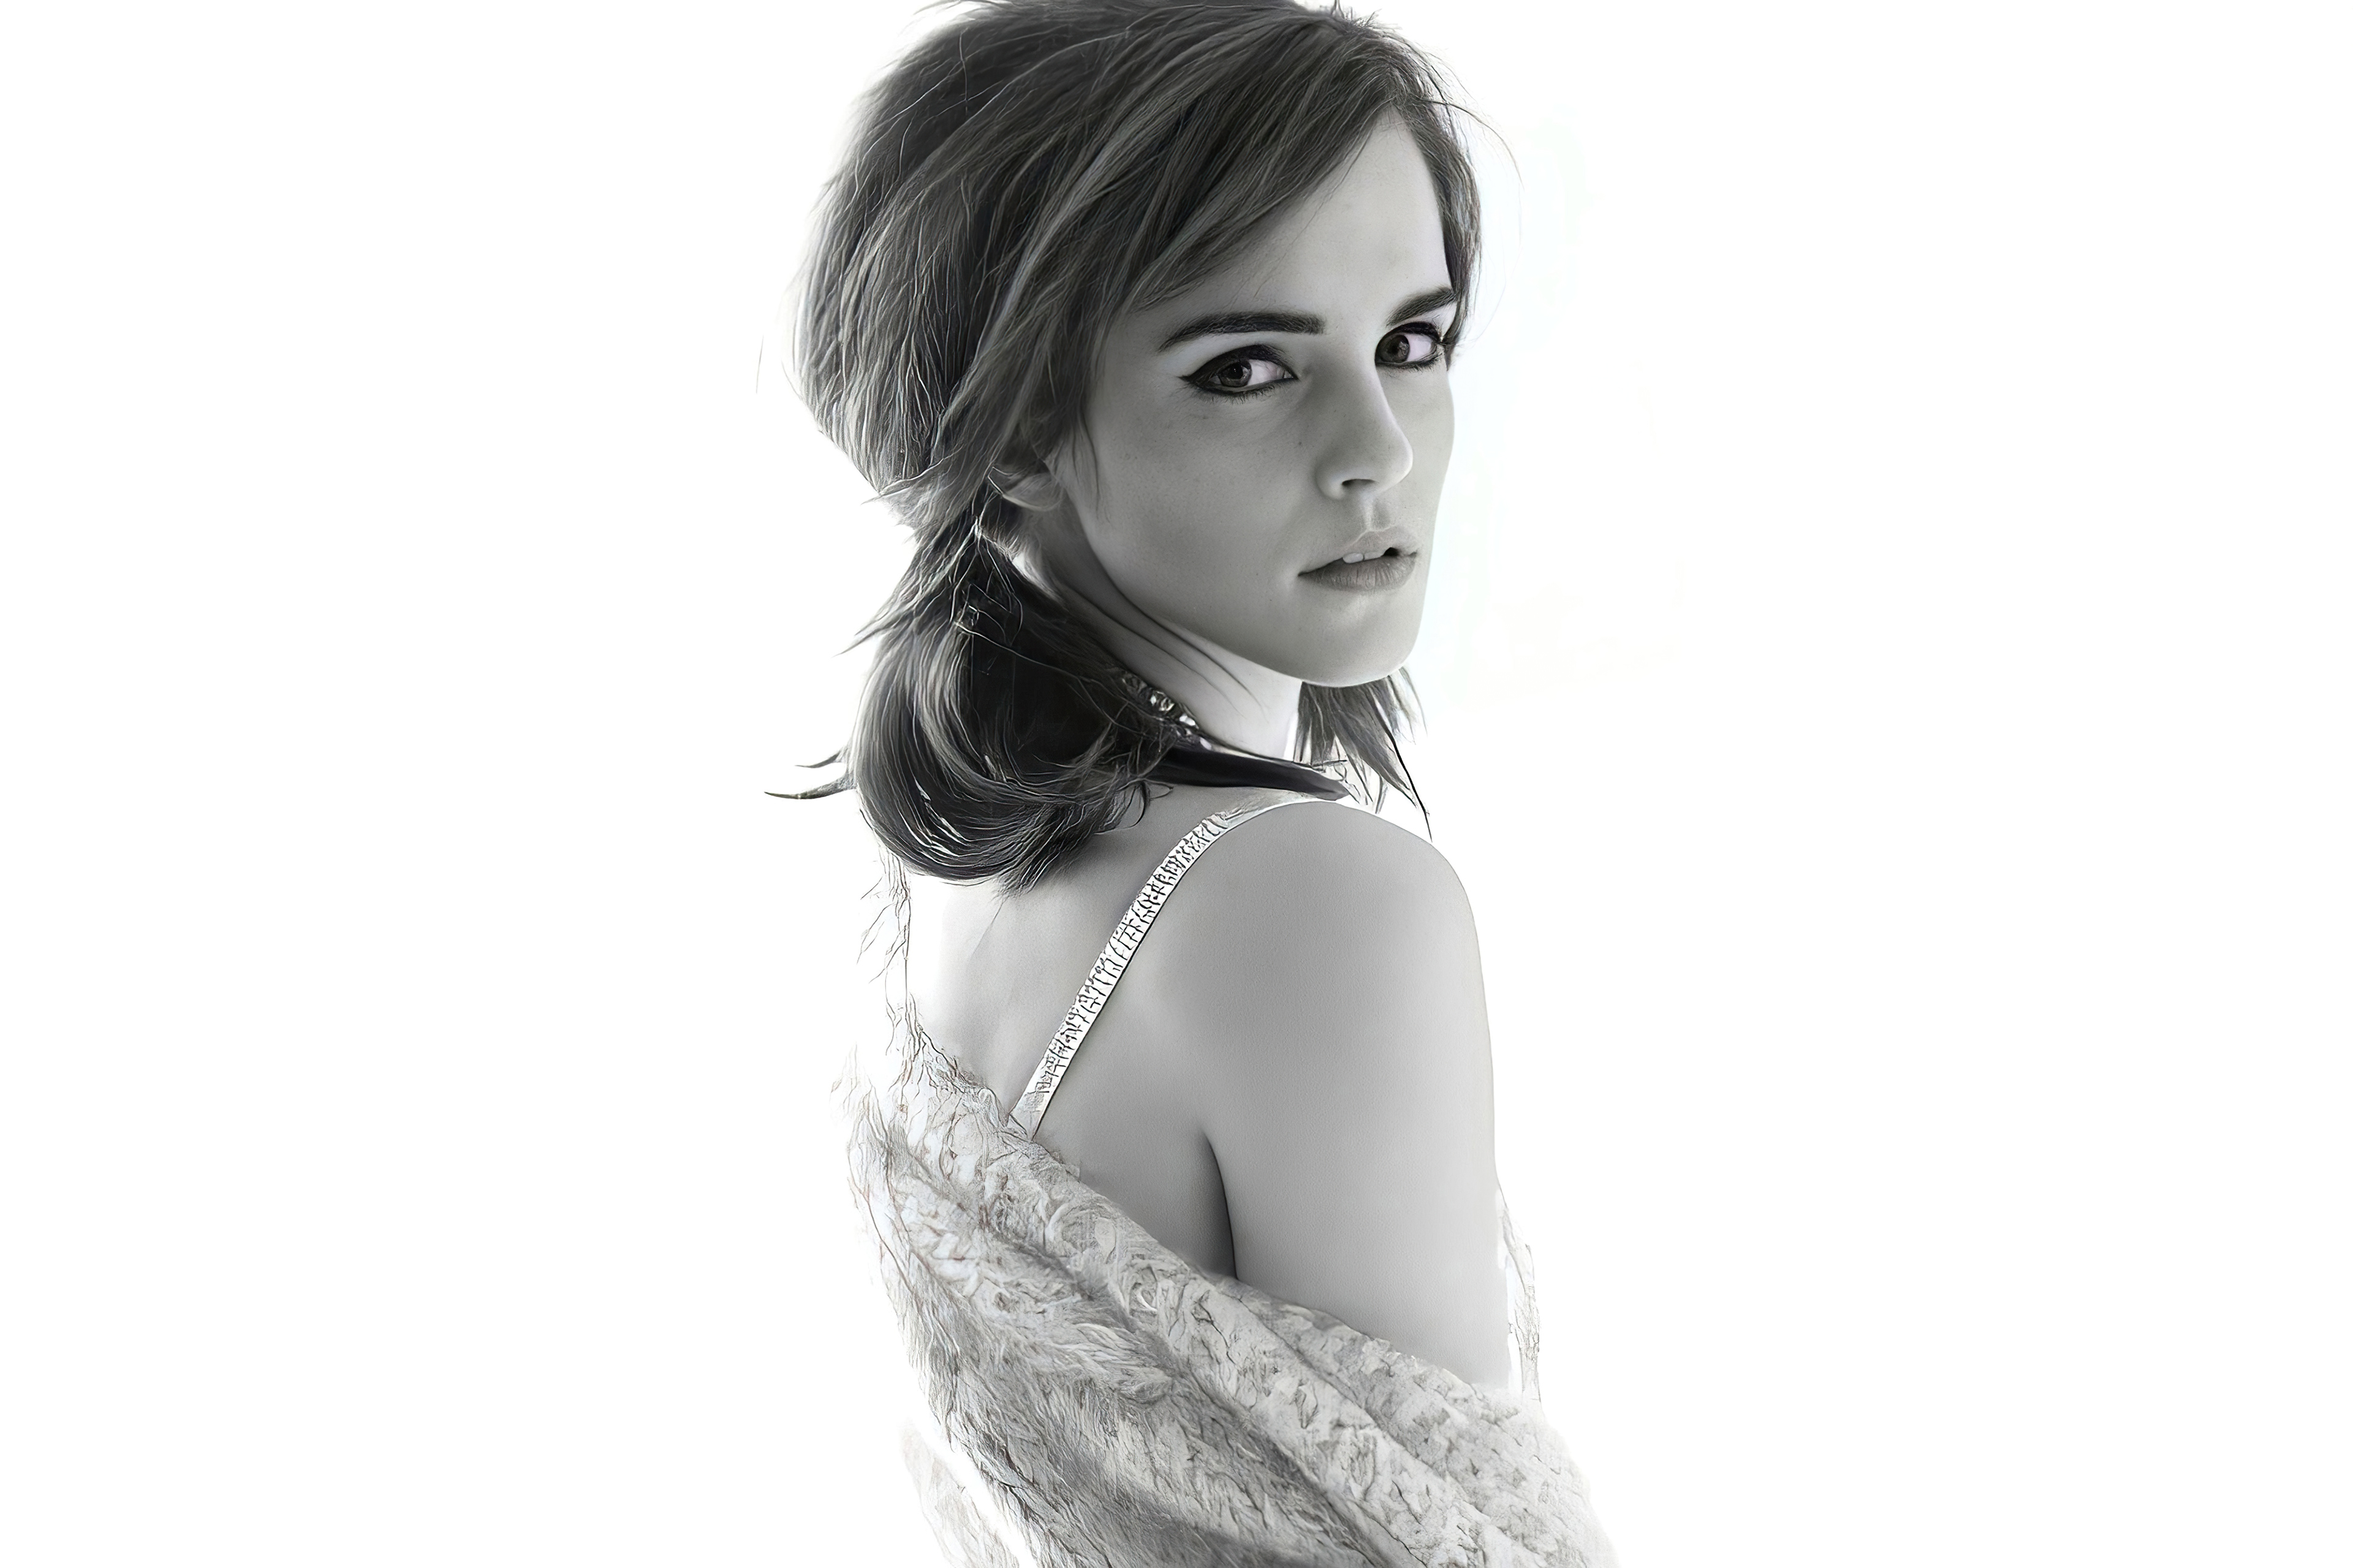 Wallpaper  Emma Watson actress model celebrity 1280x1707  chubbence   1326413  HD Wallpapers  WallHere